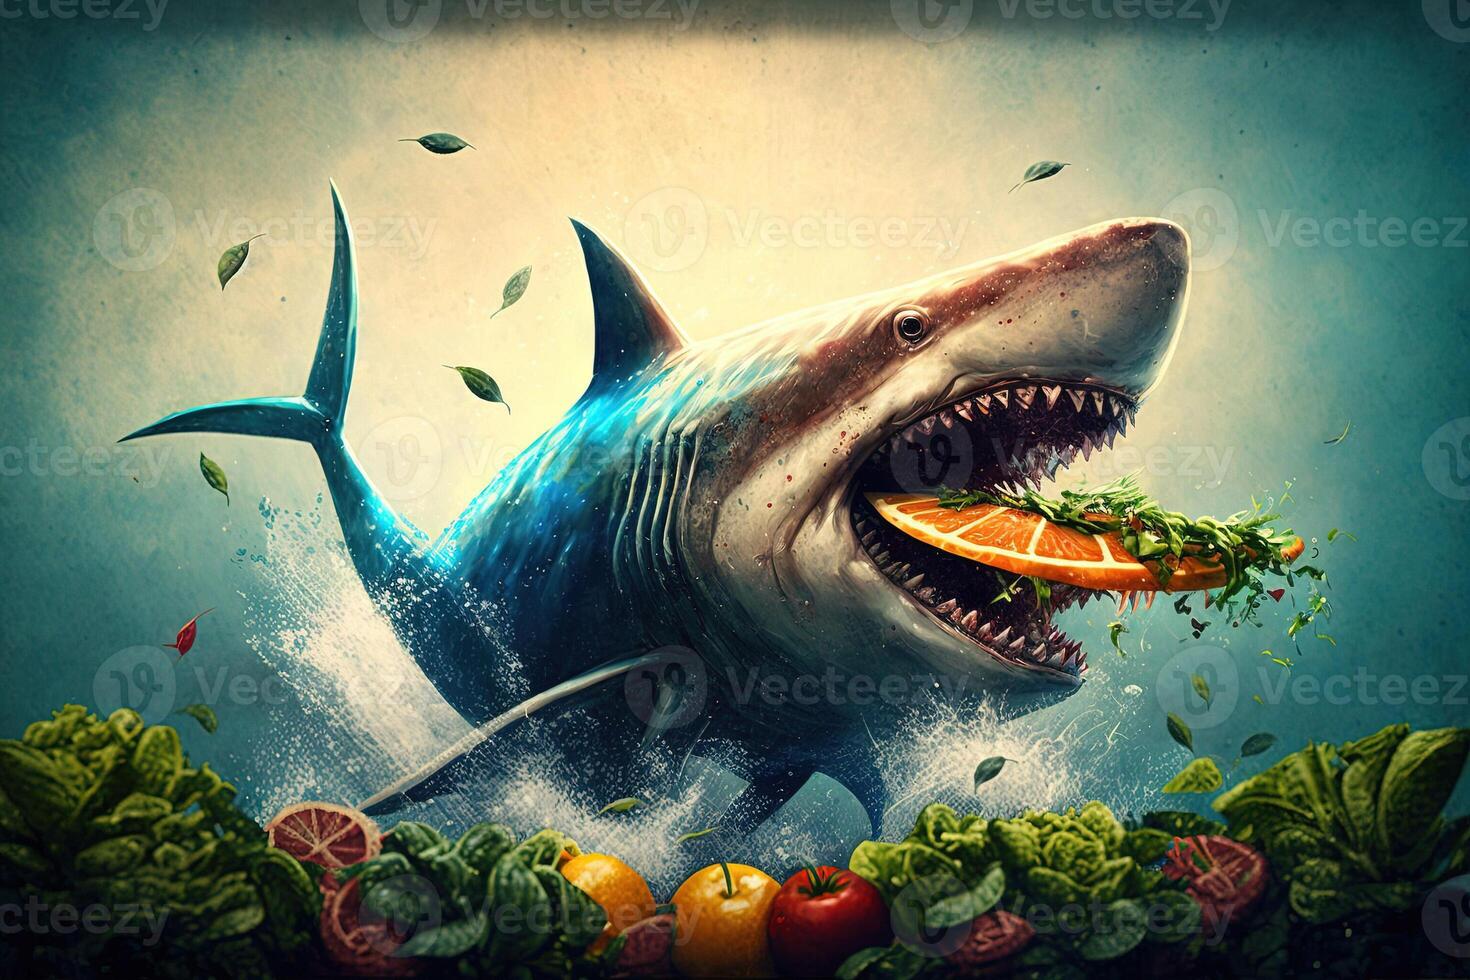 Vegetarian Veggie shark illustration photo